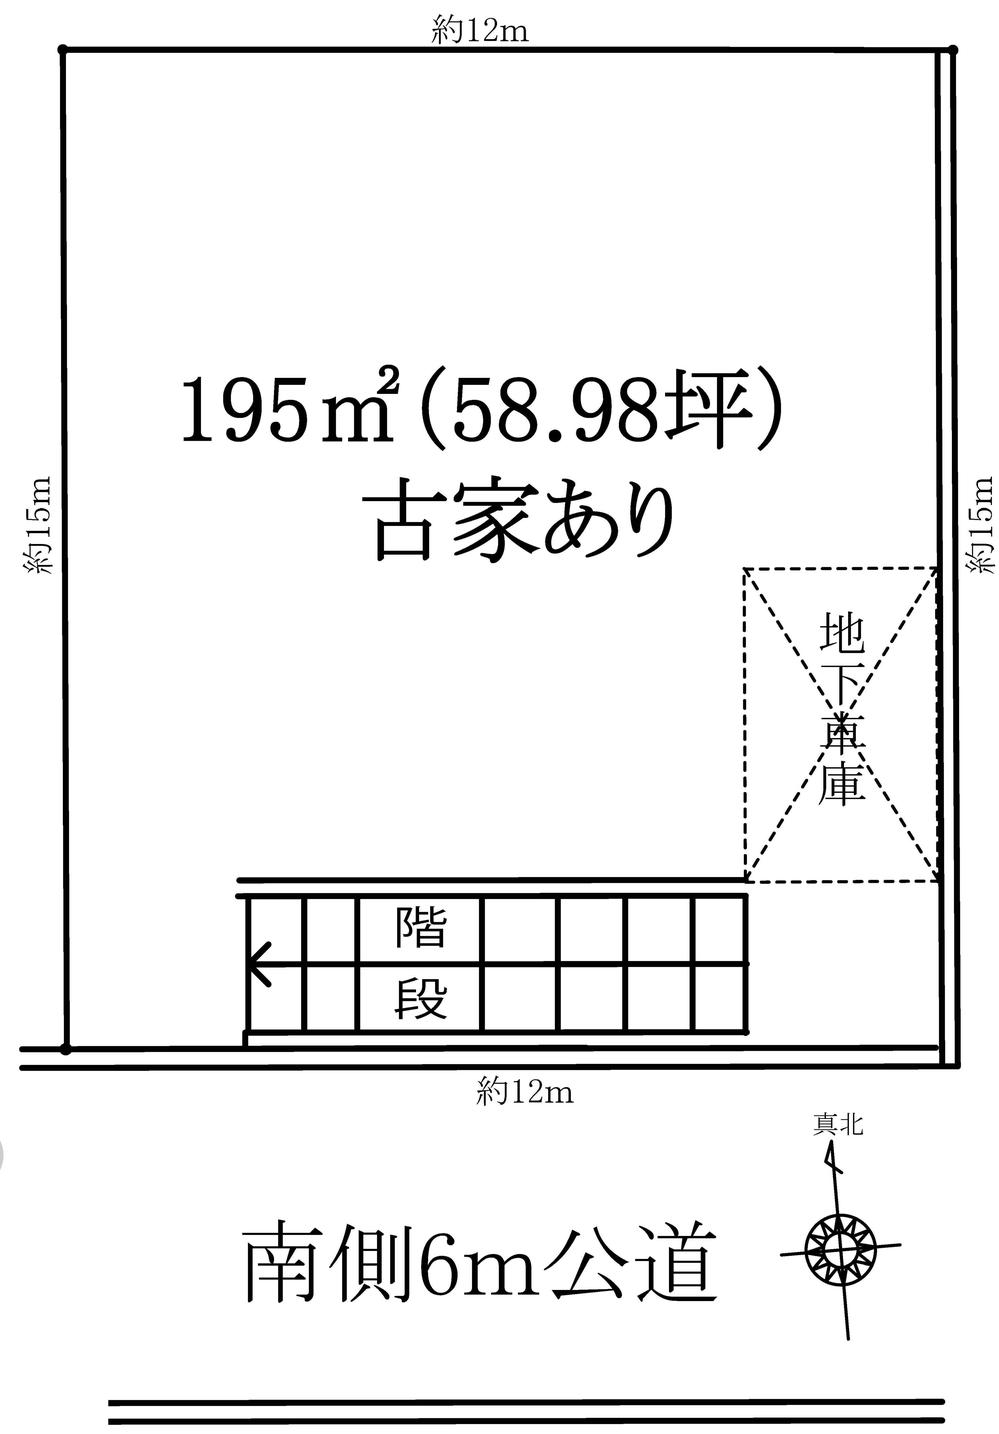 Compartment figure. Land price 20.8 million yen, Land area 195 sq m